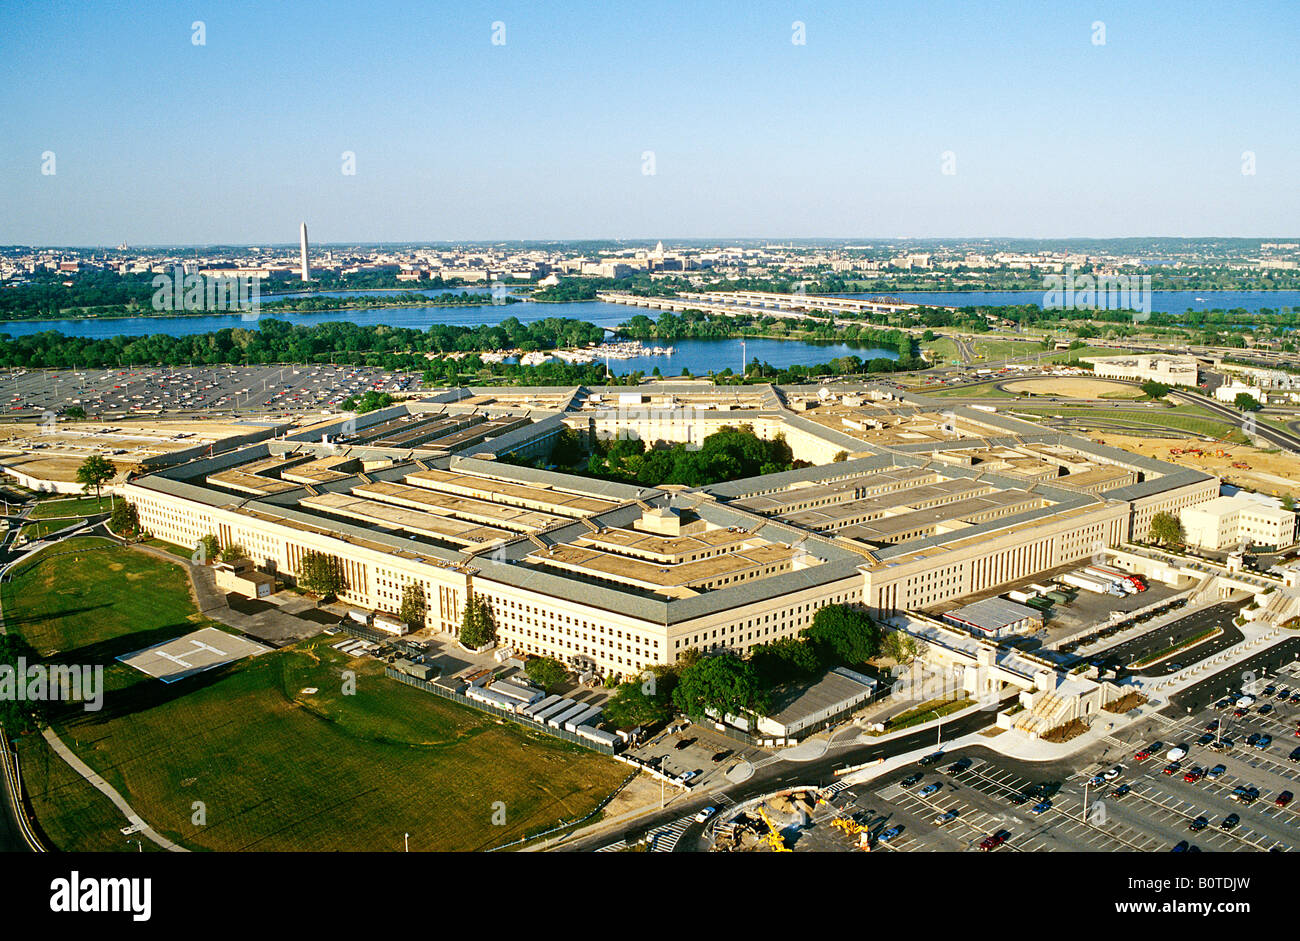 The Pentagon Building